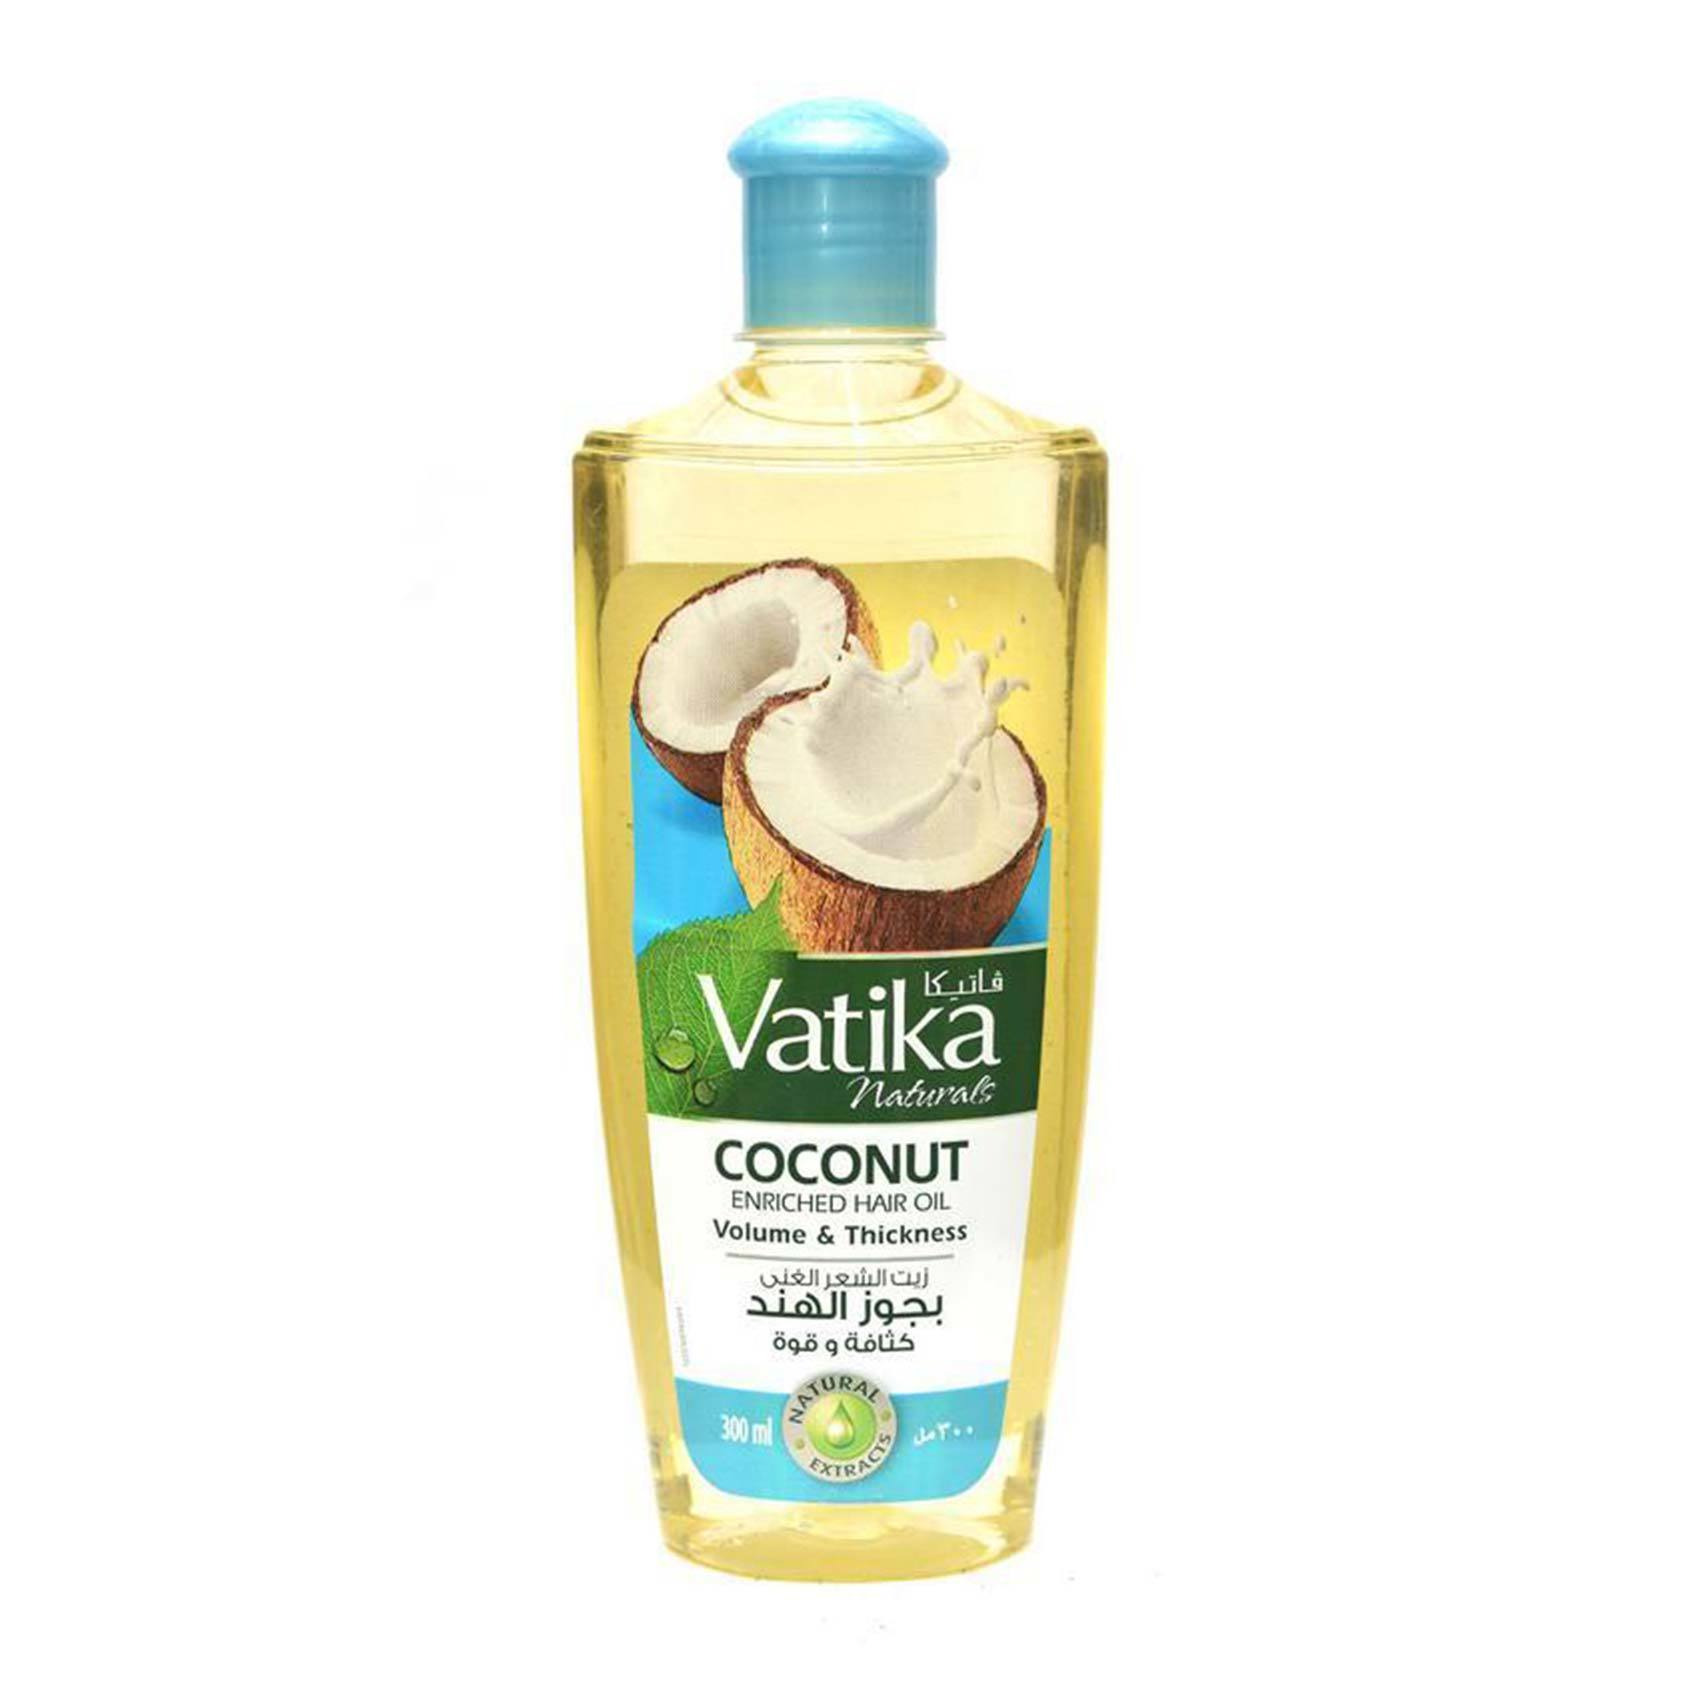 Vatika Coconut hair Oil 300ml